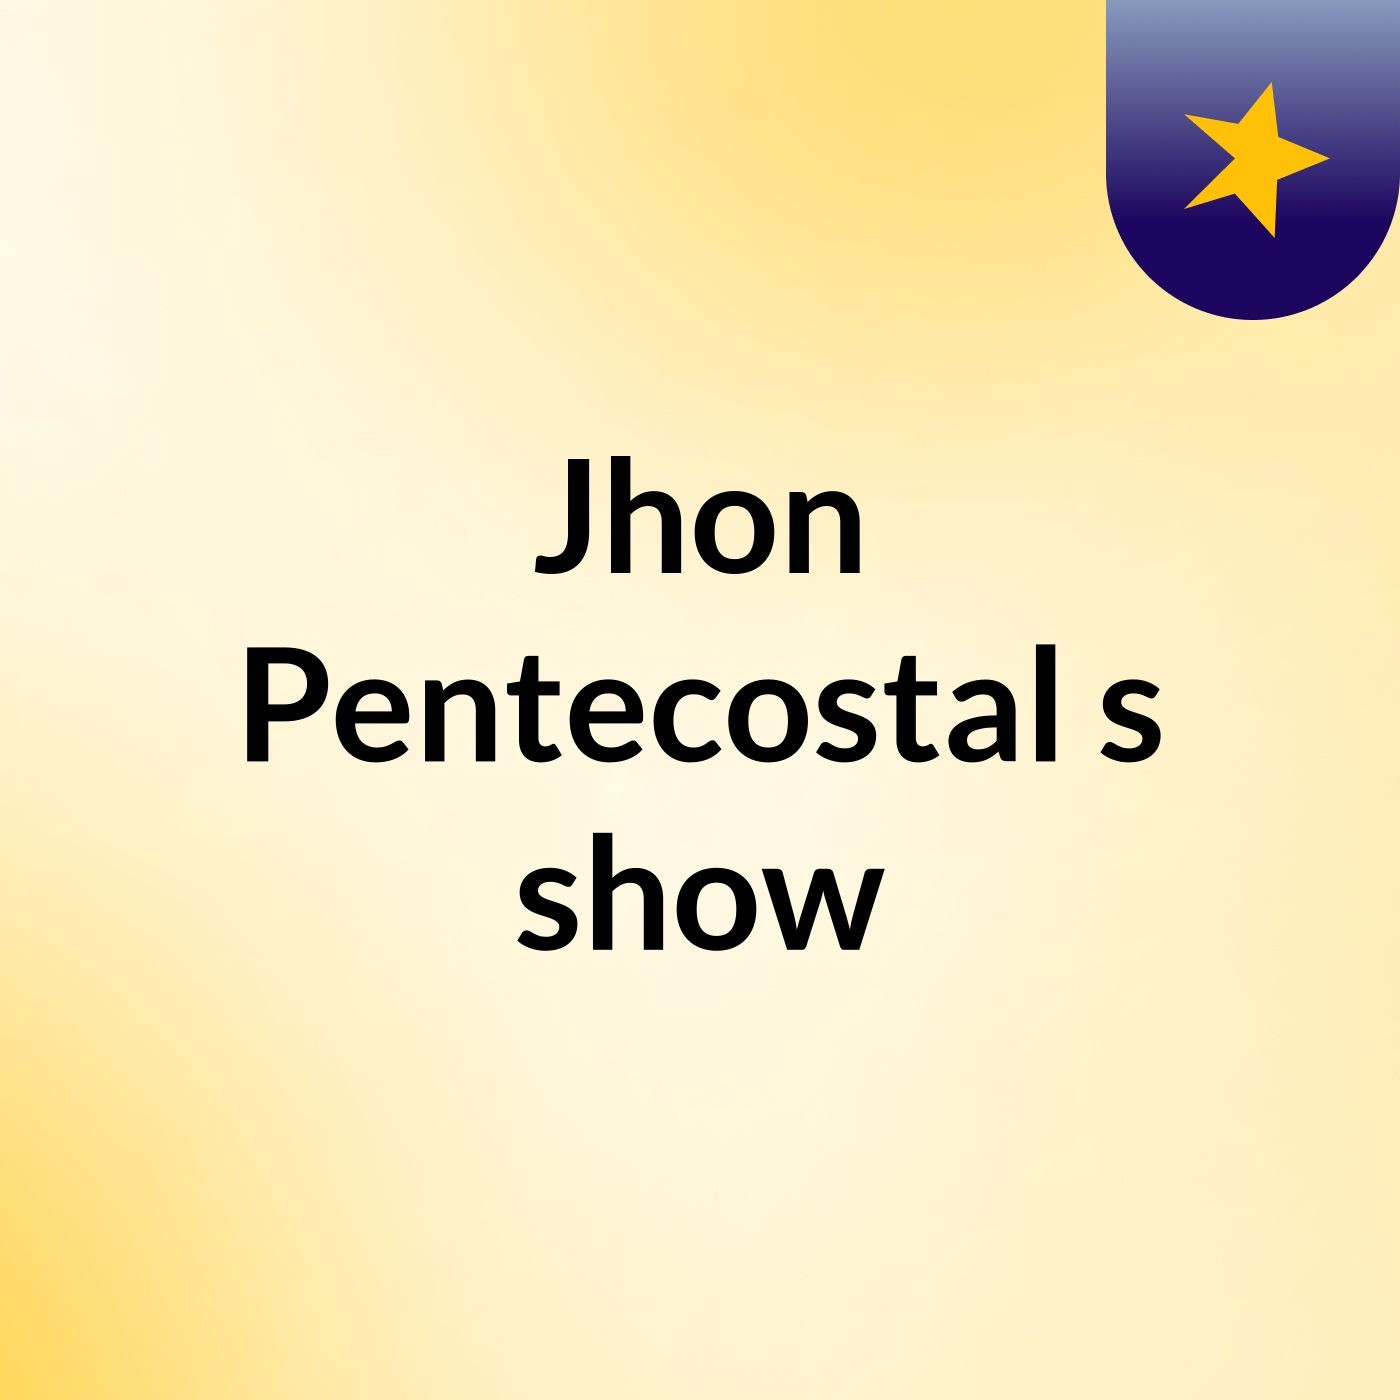 Jhon Pentecostal's show